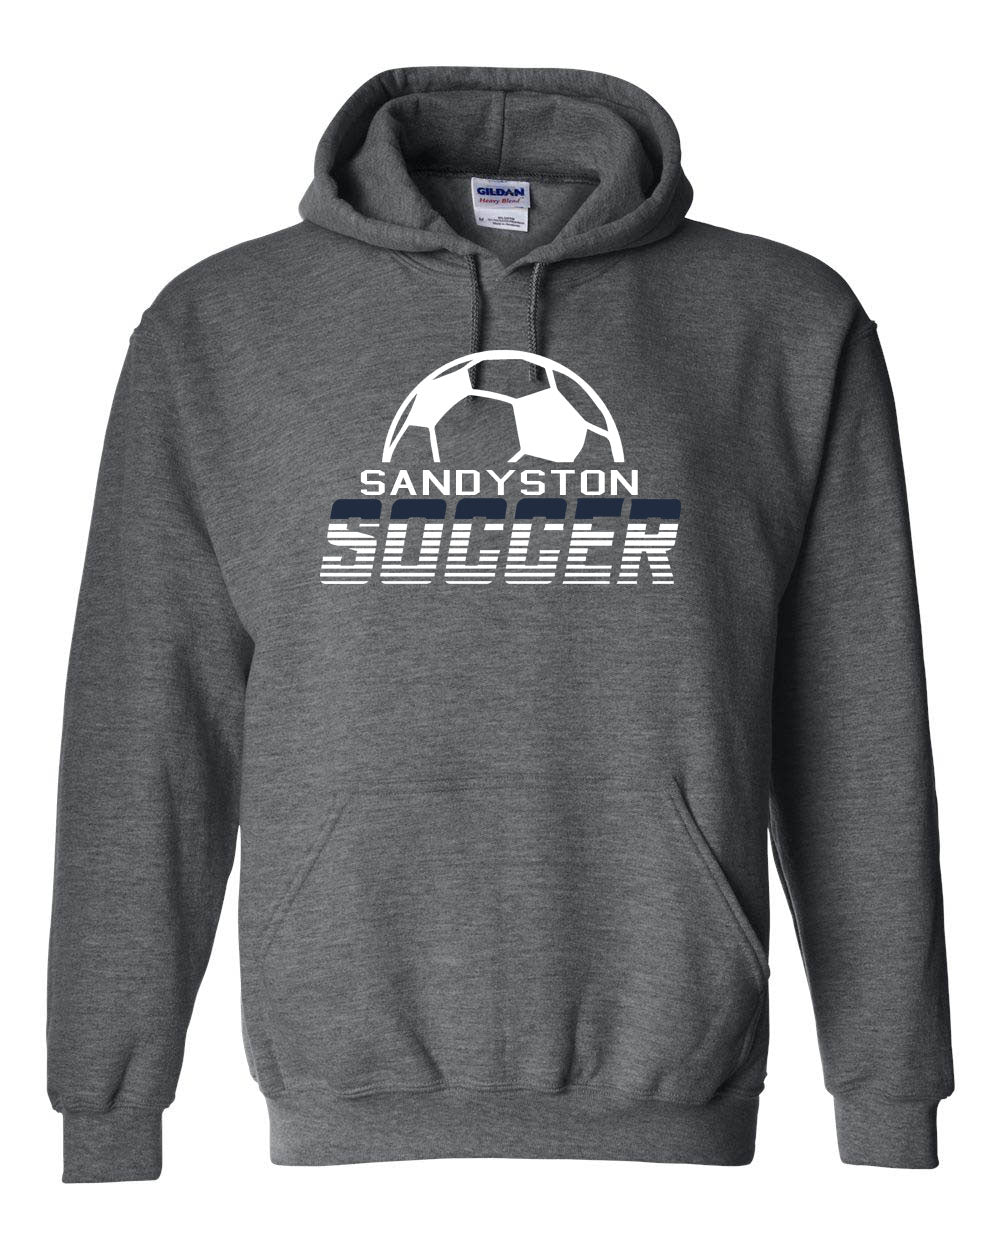 Sandyston Soccer Design 3 Hooded Sweatshirt